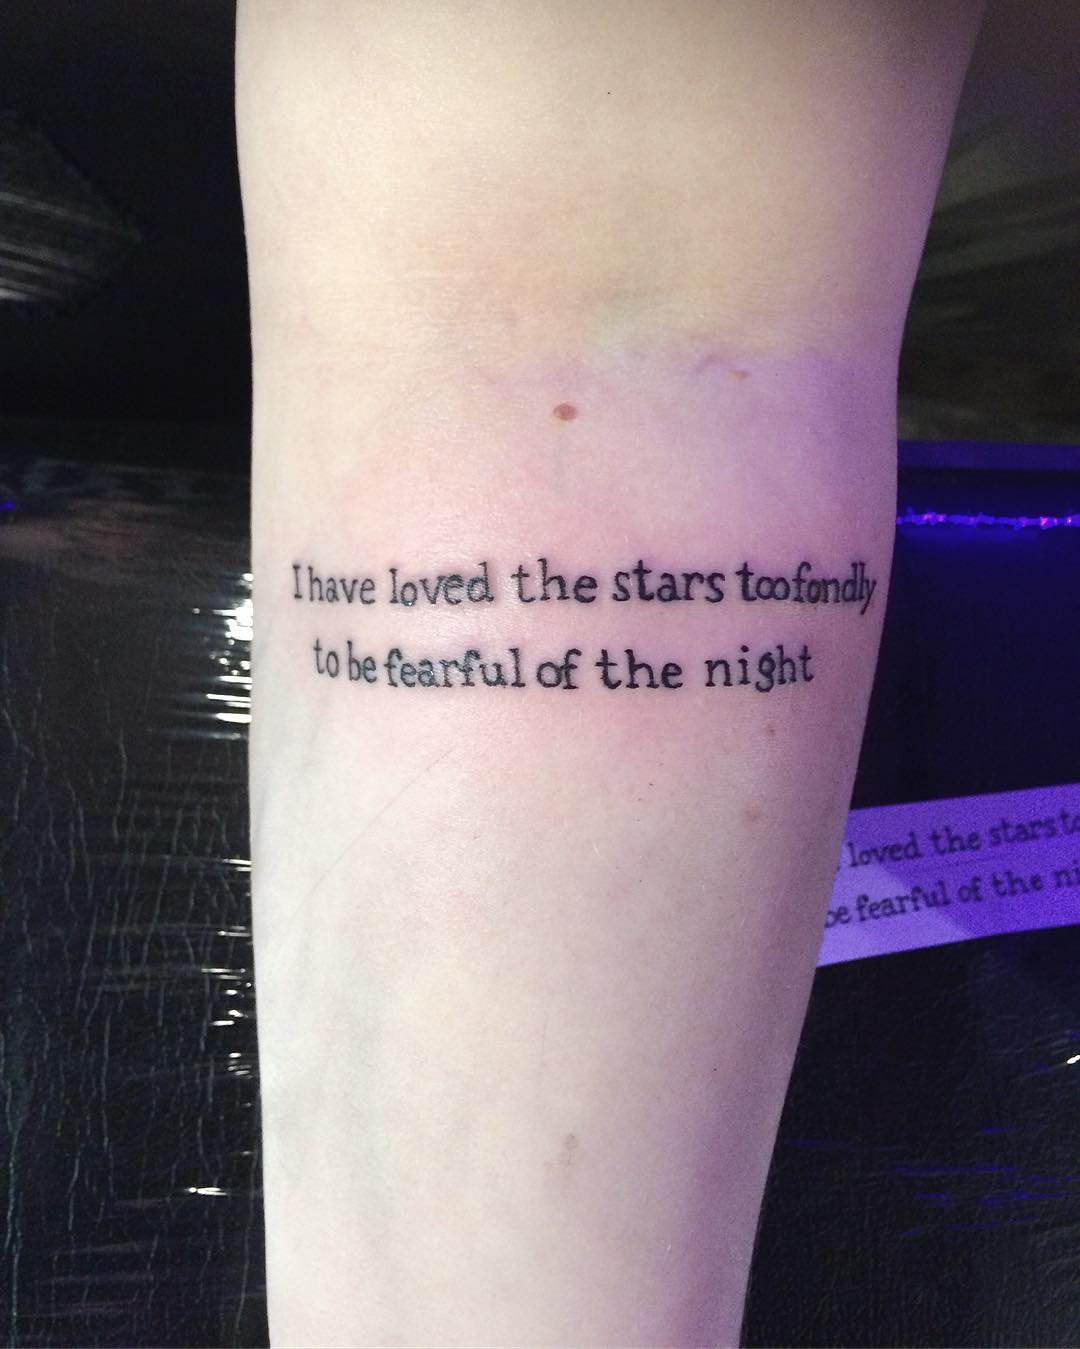 TATTOOS.ORG — Poem Tattoo My mums poem, published on my skin,...